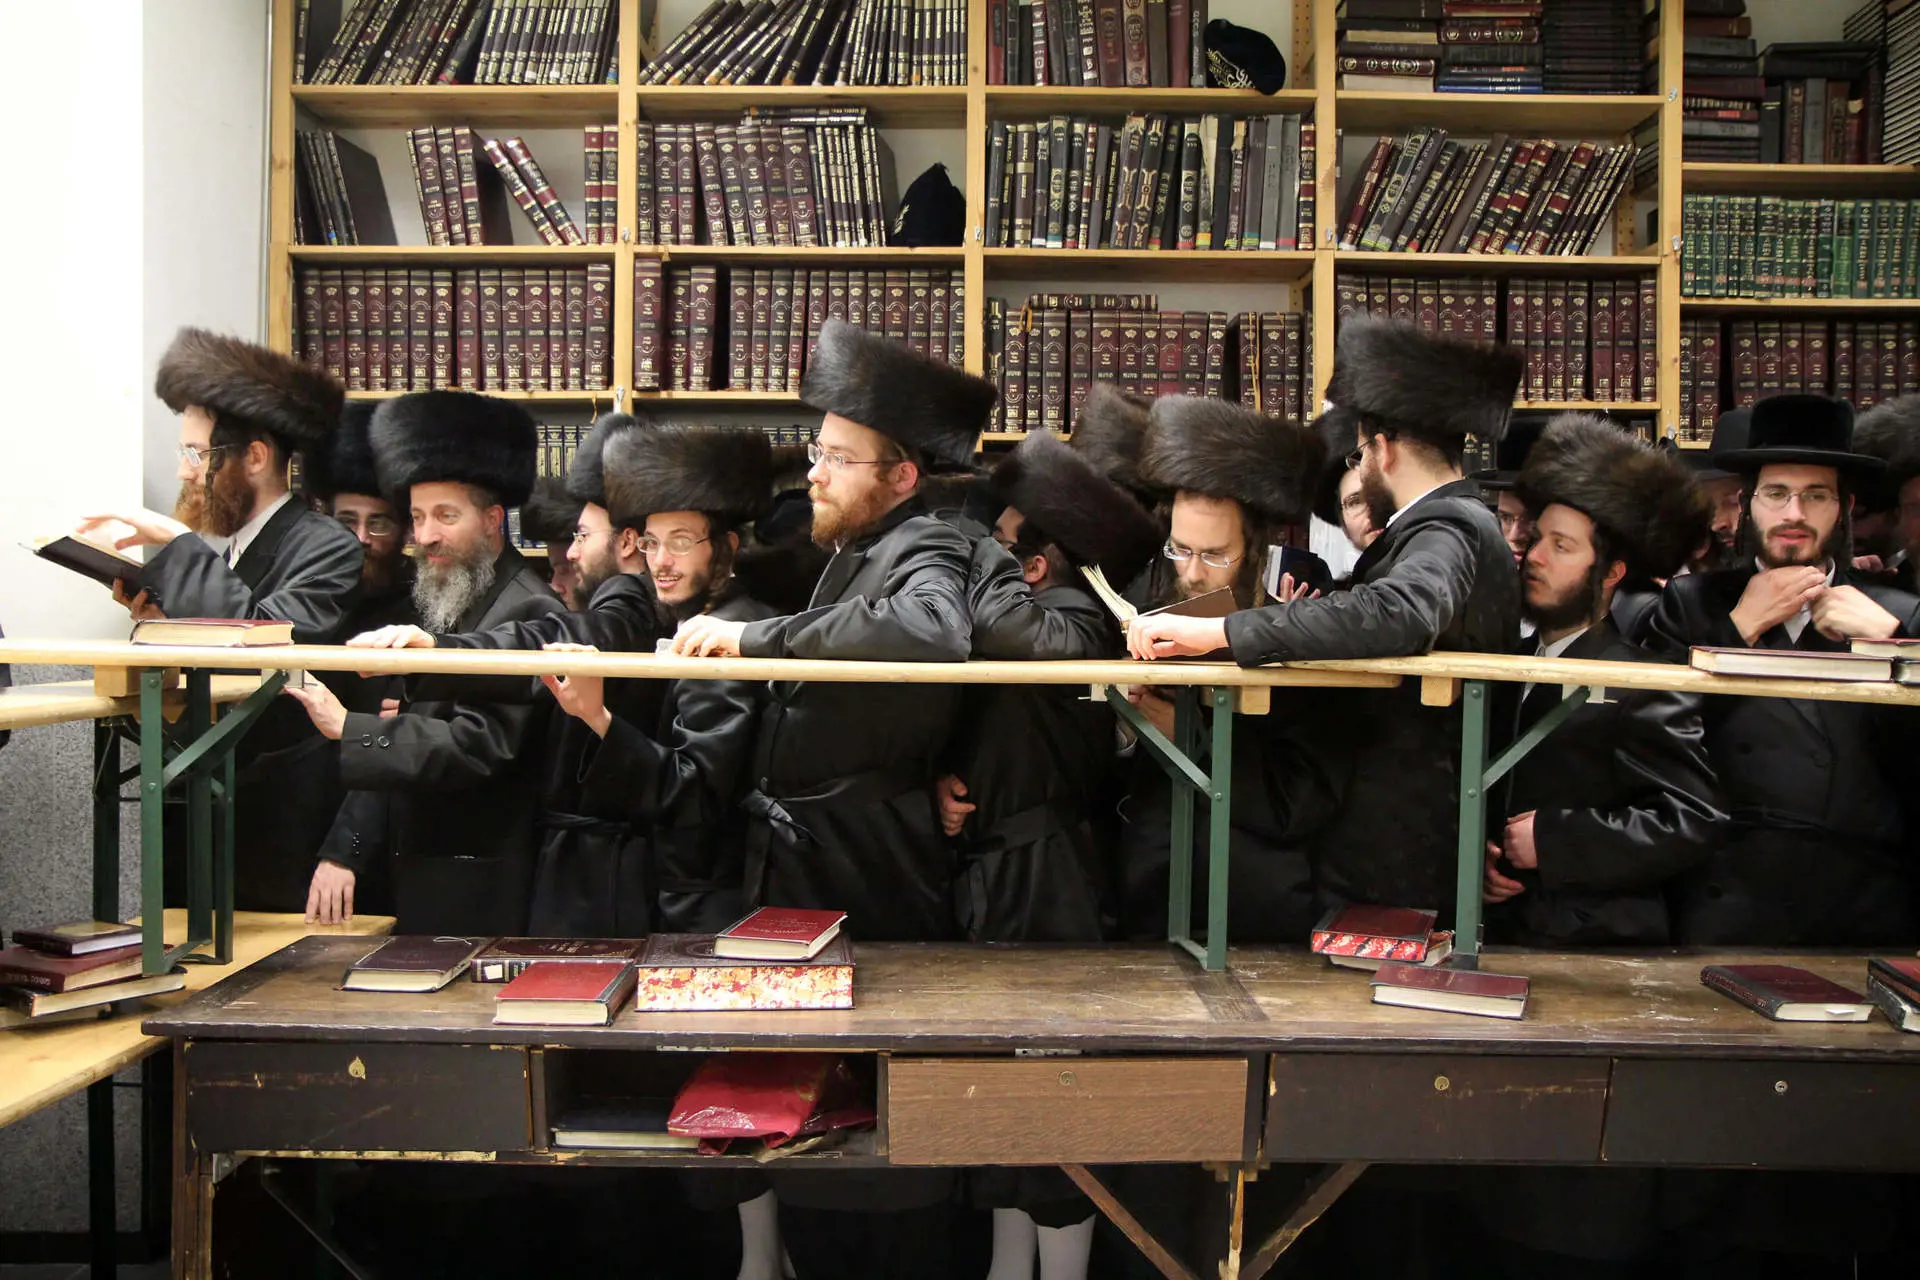 Amsterdam Jewish Men Library